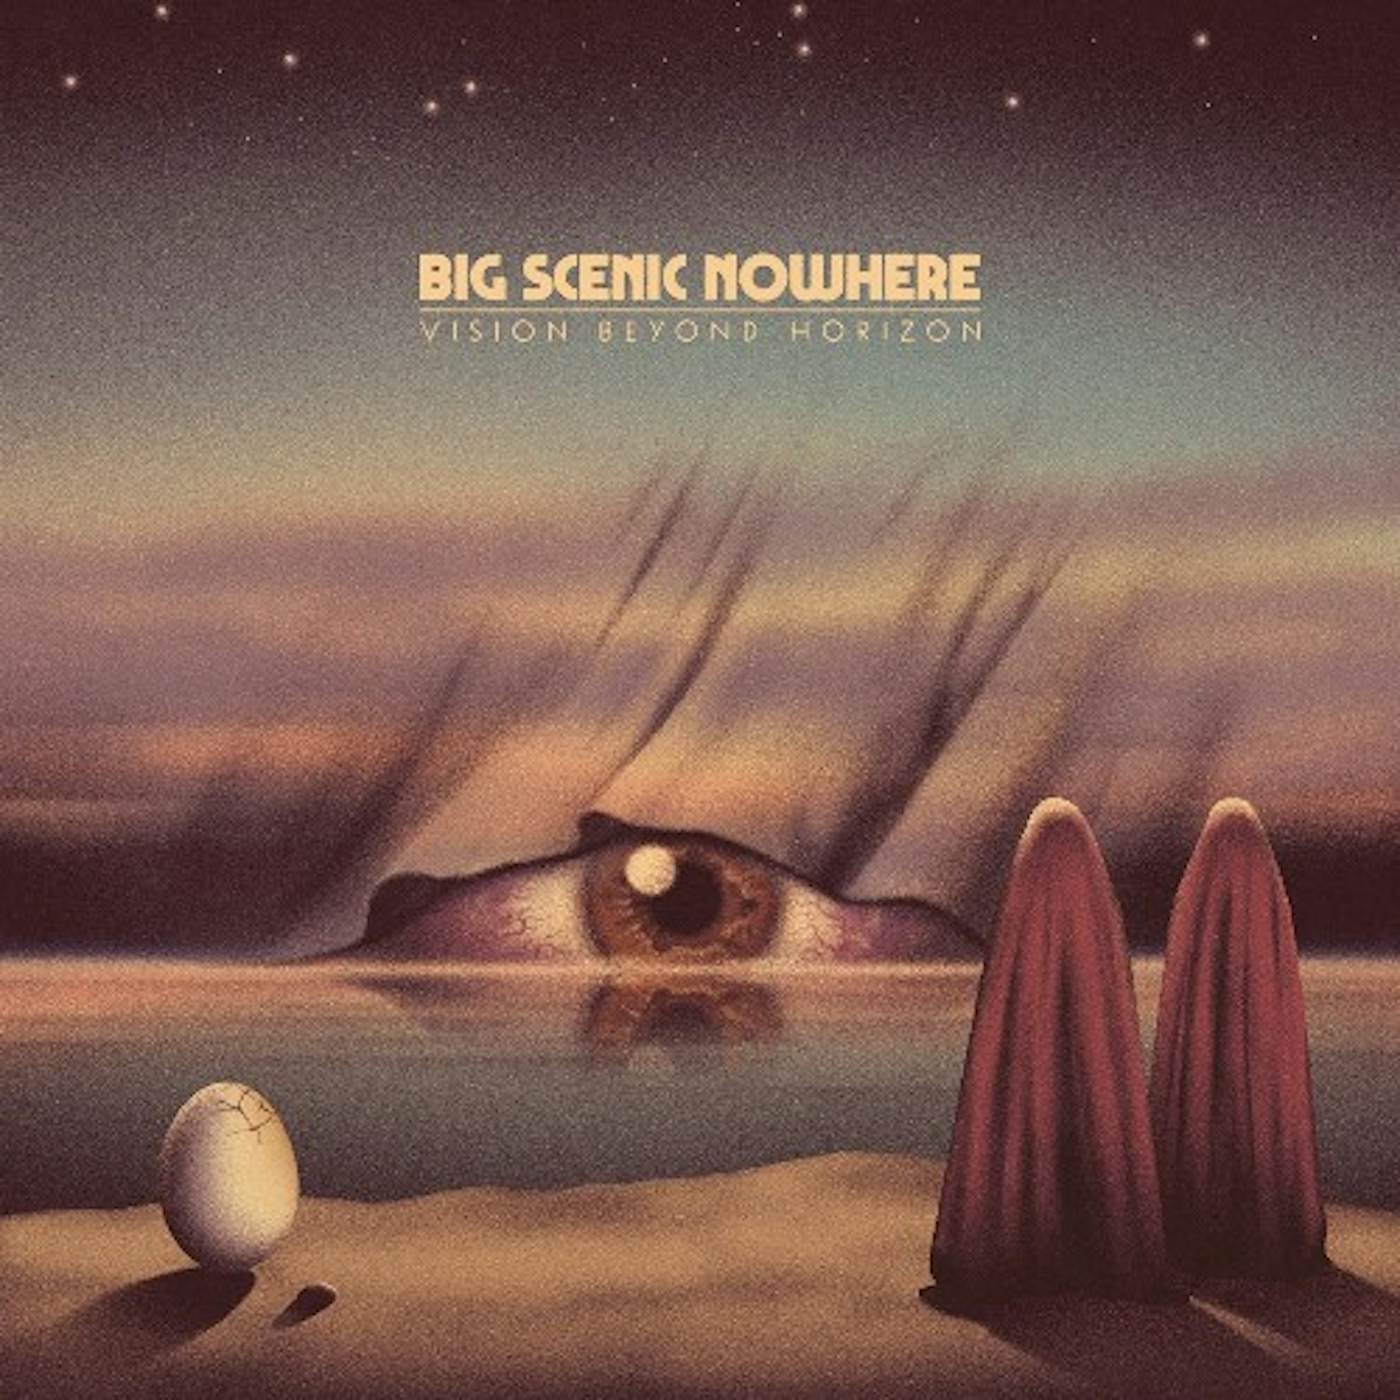 Big Scenic Nowhere Vision Beyond Horizon Vinyl Record